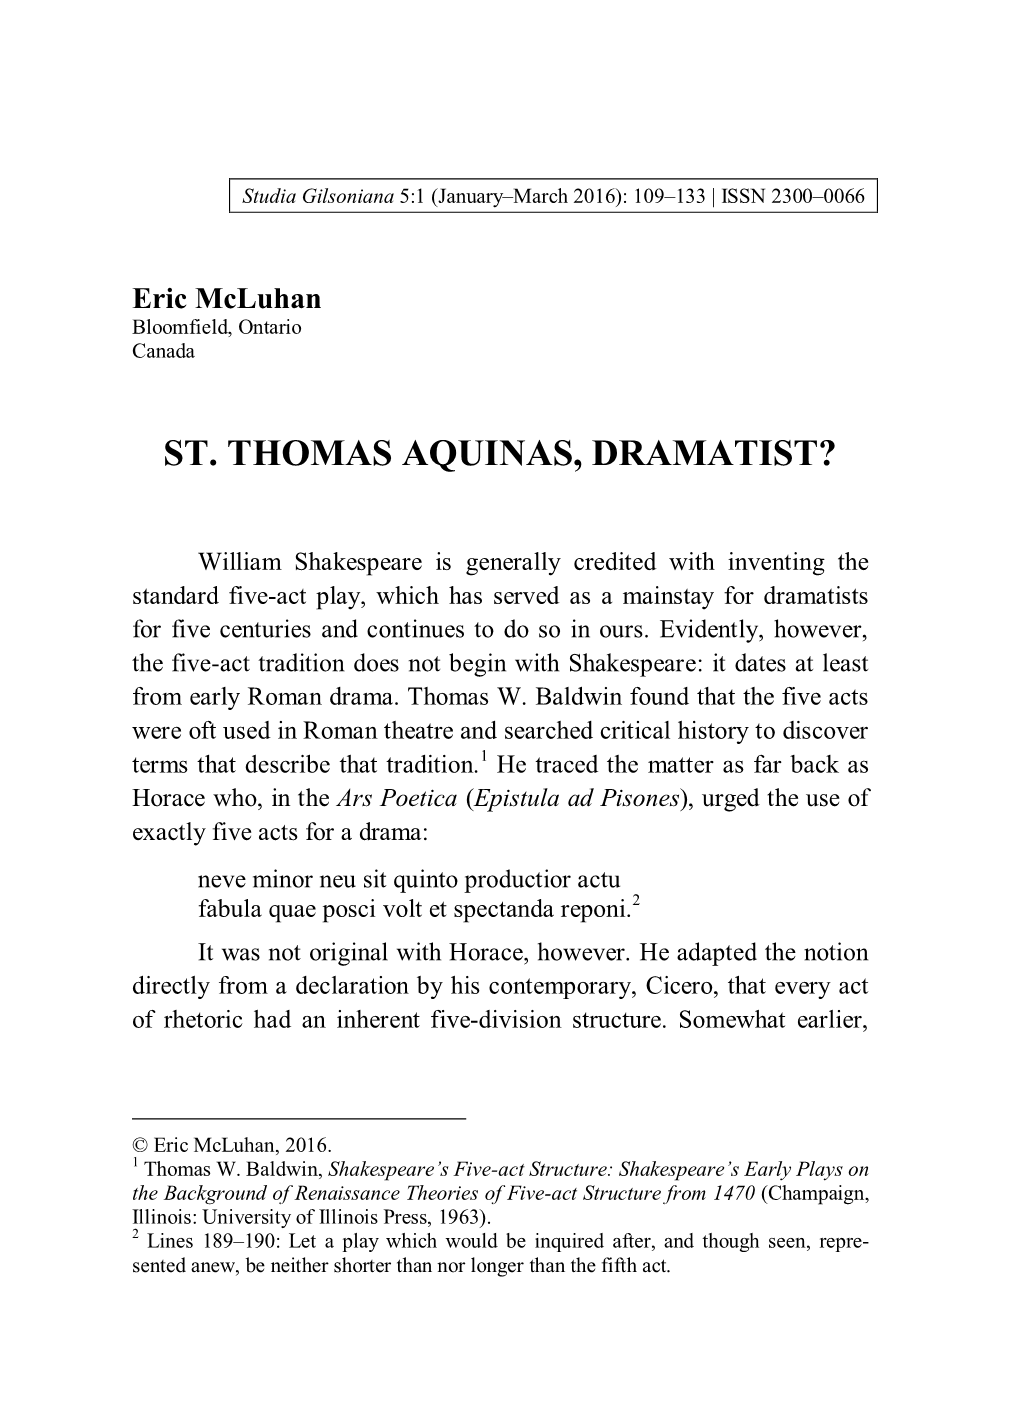 St. Thomas Aquinas, Dramatist?